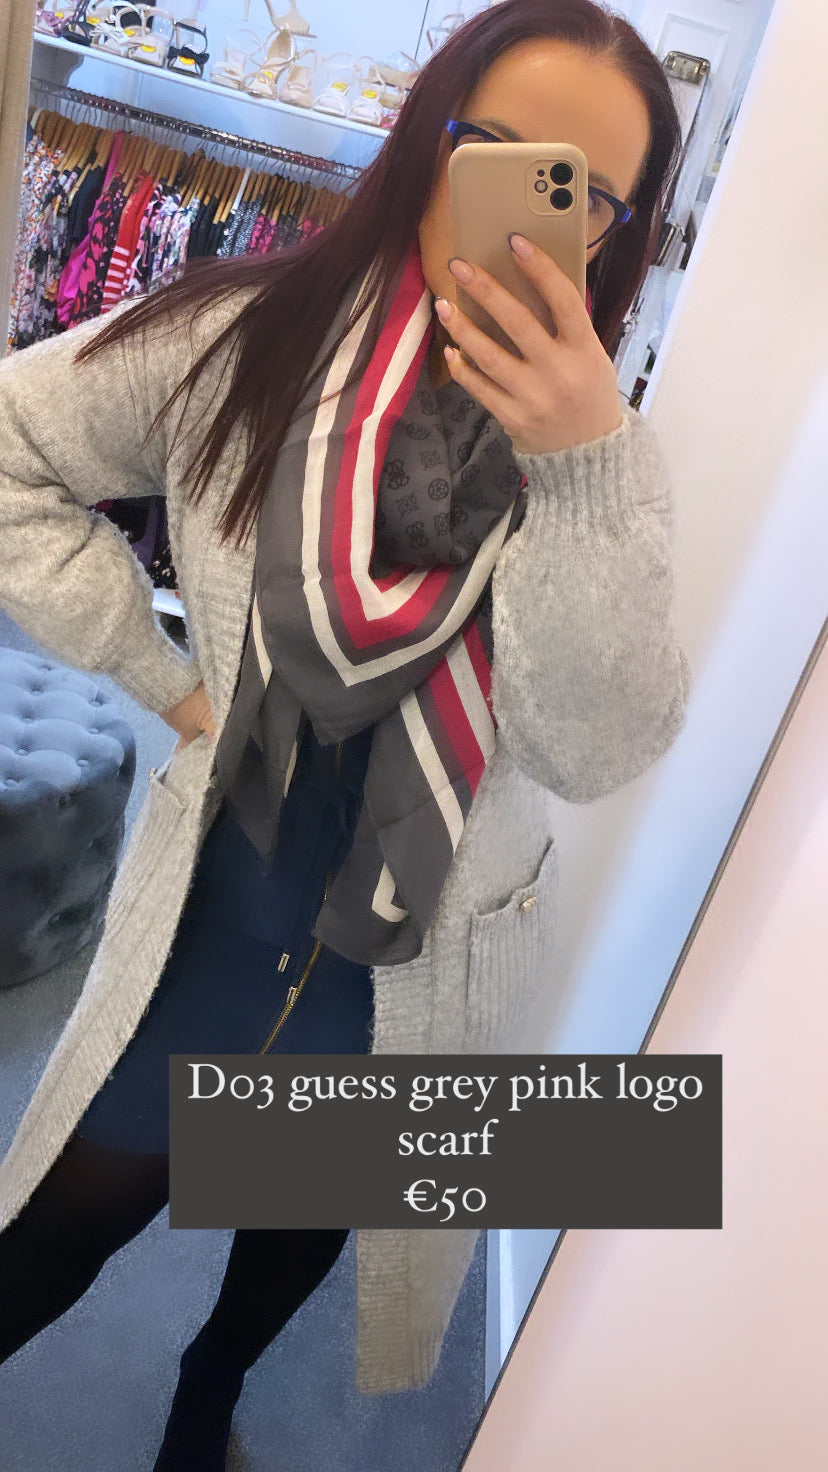 Aw5121mOD03 guess grey pink logo scarf